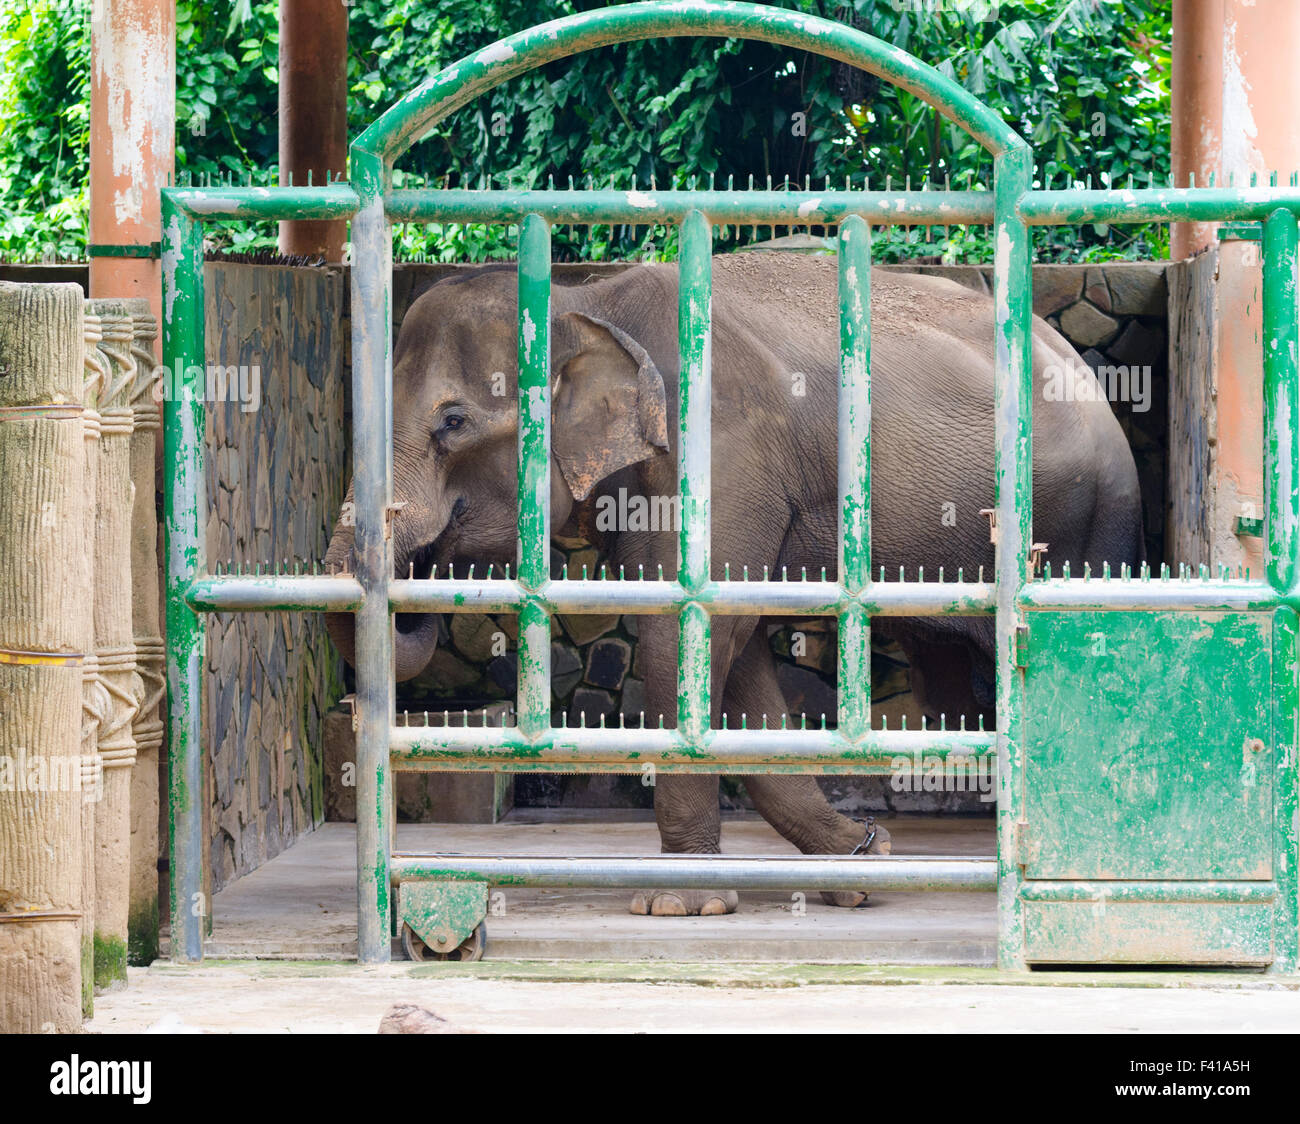 elephant in zoo enclosure Stock Photo